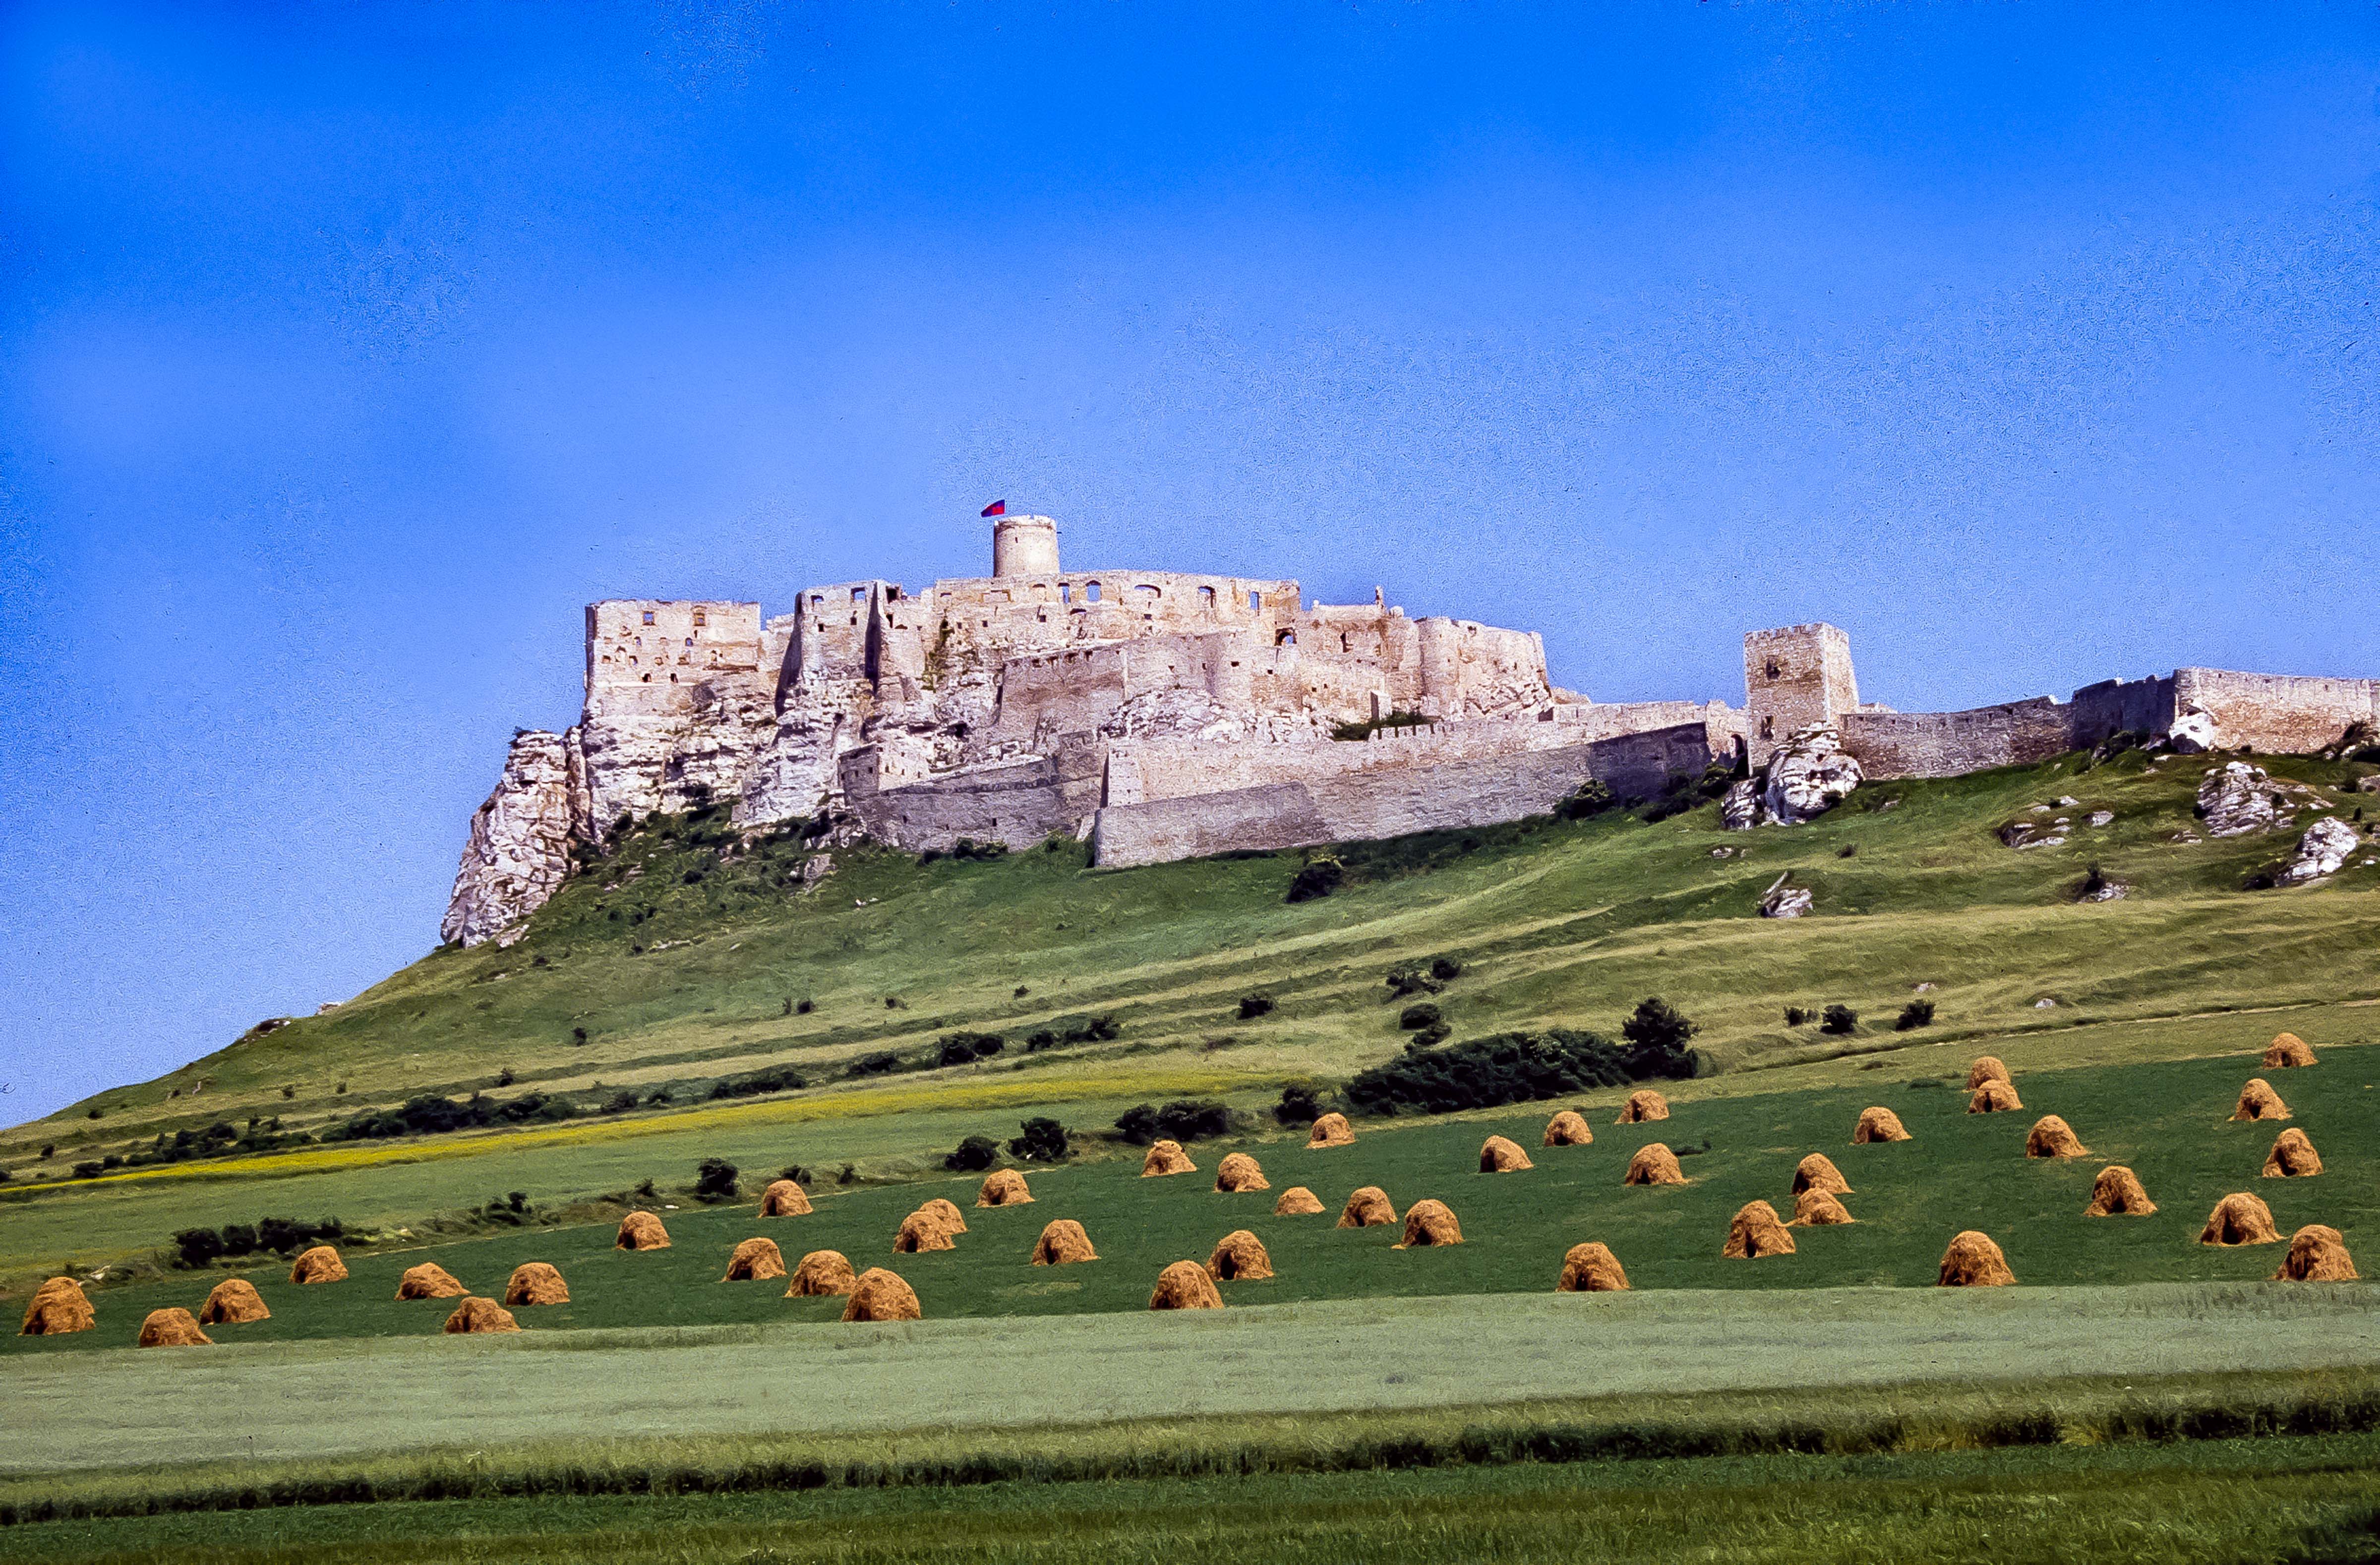 Slovakia, Spisske Hrad (Spis Castle), 1997